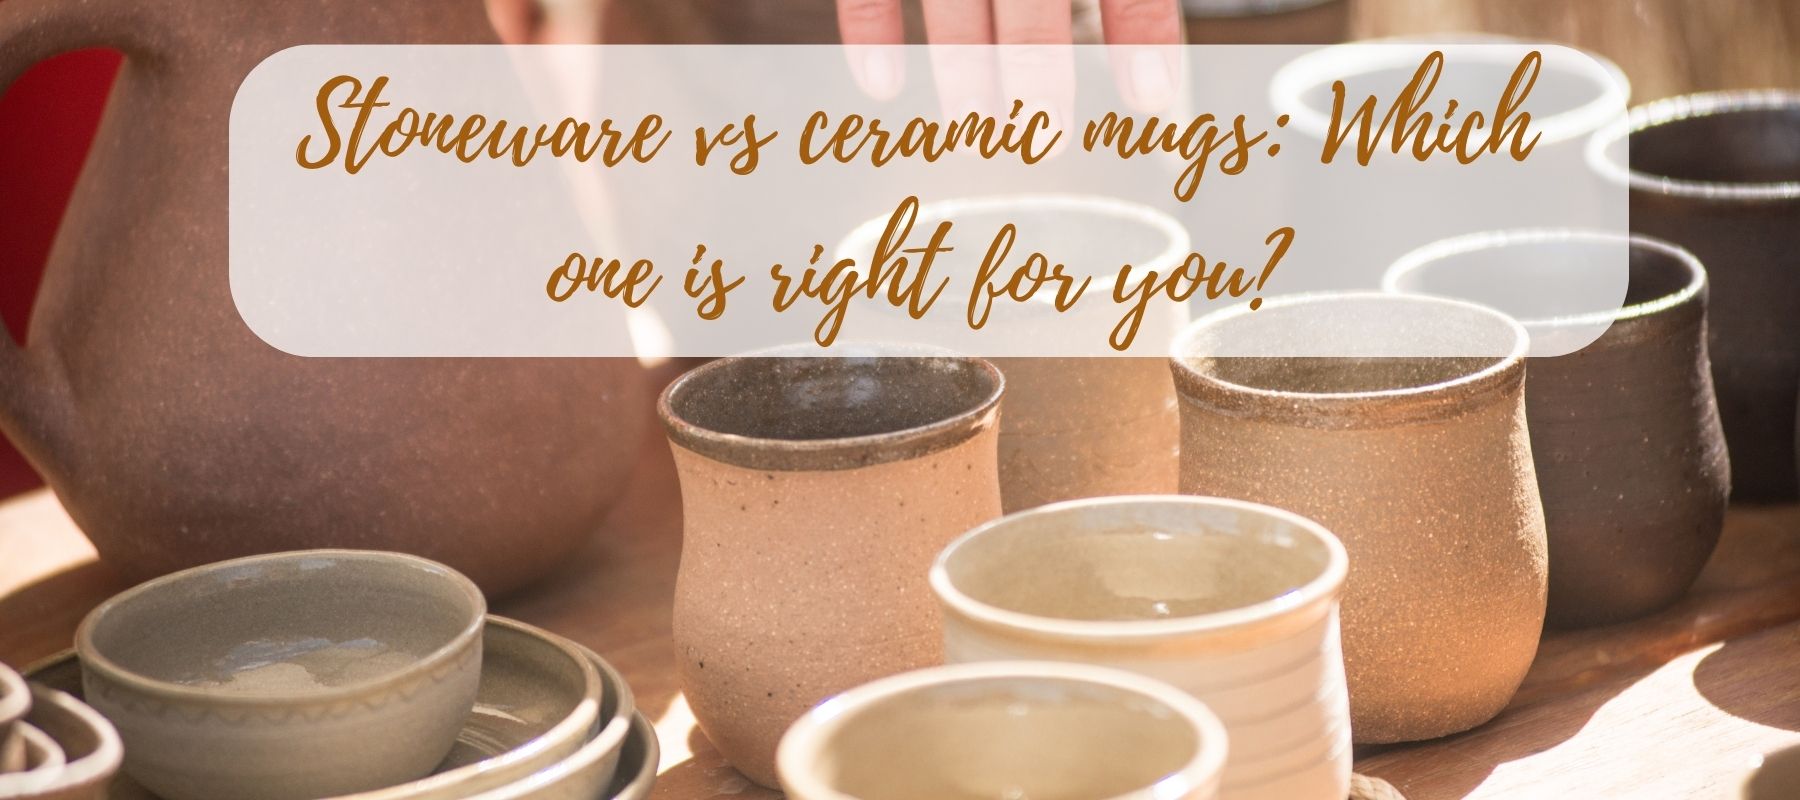 Stoneware-vs-ceramic-mugs